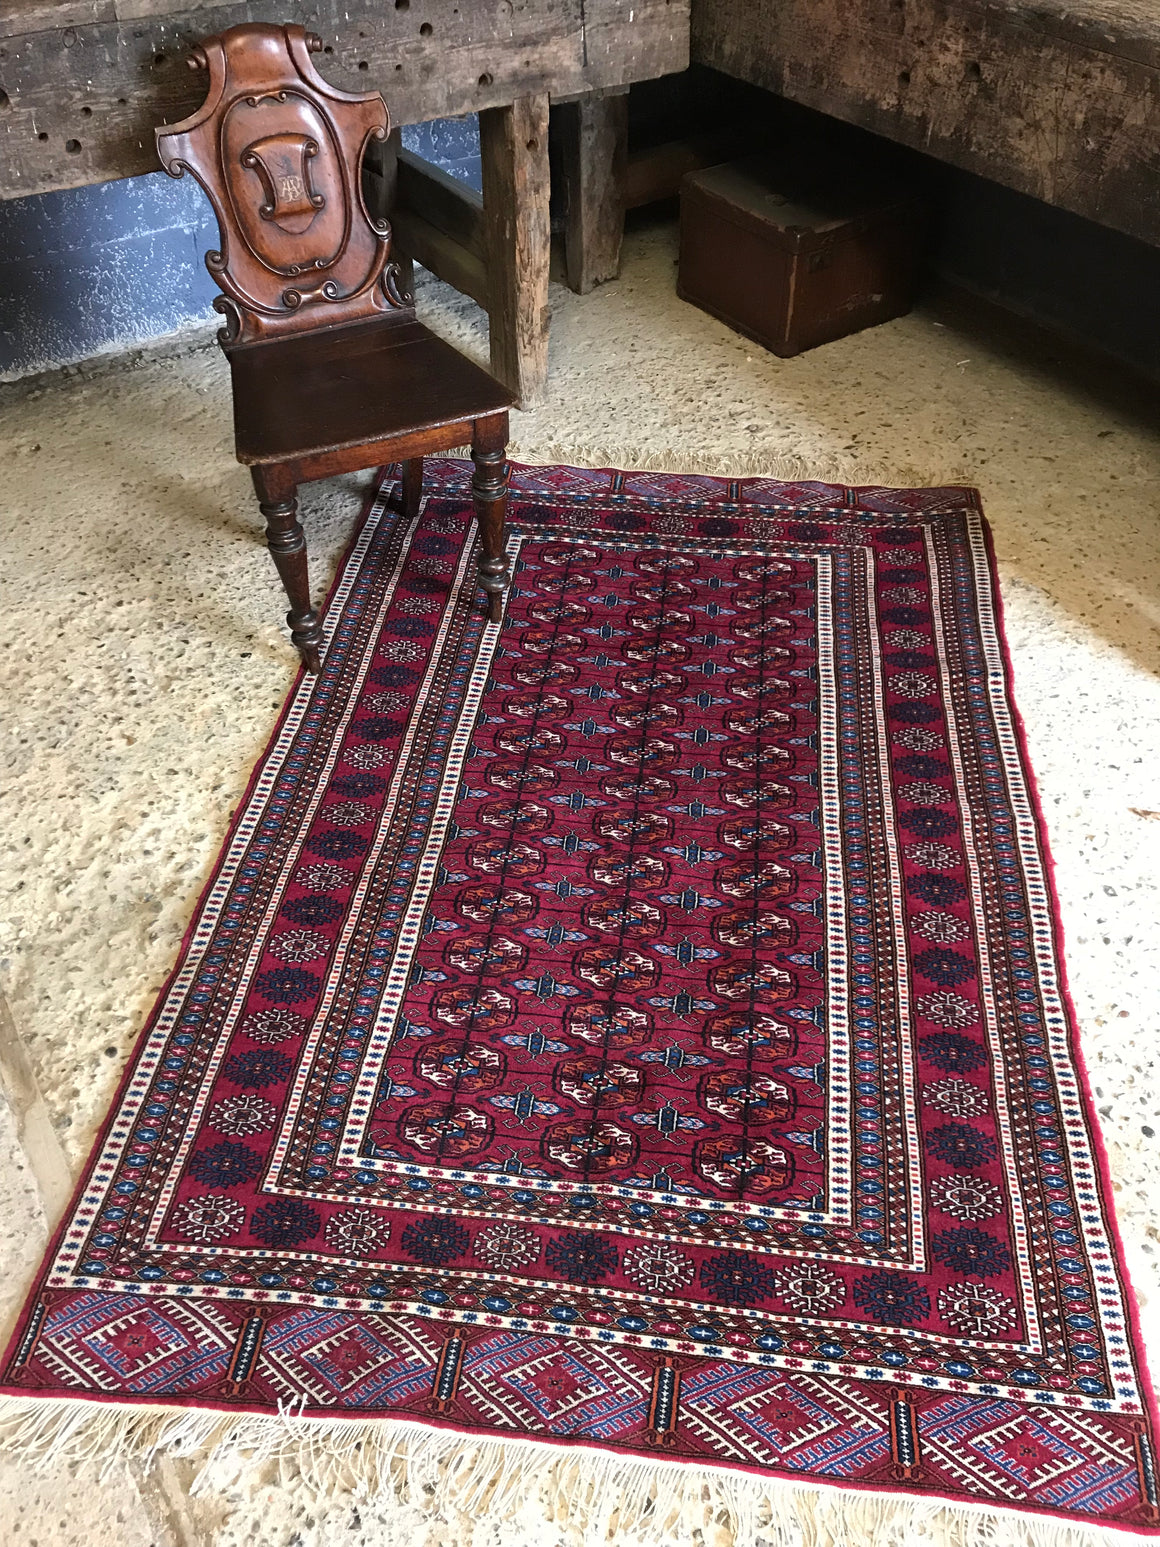 A rectangular red ground Persian rug